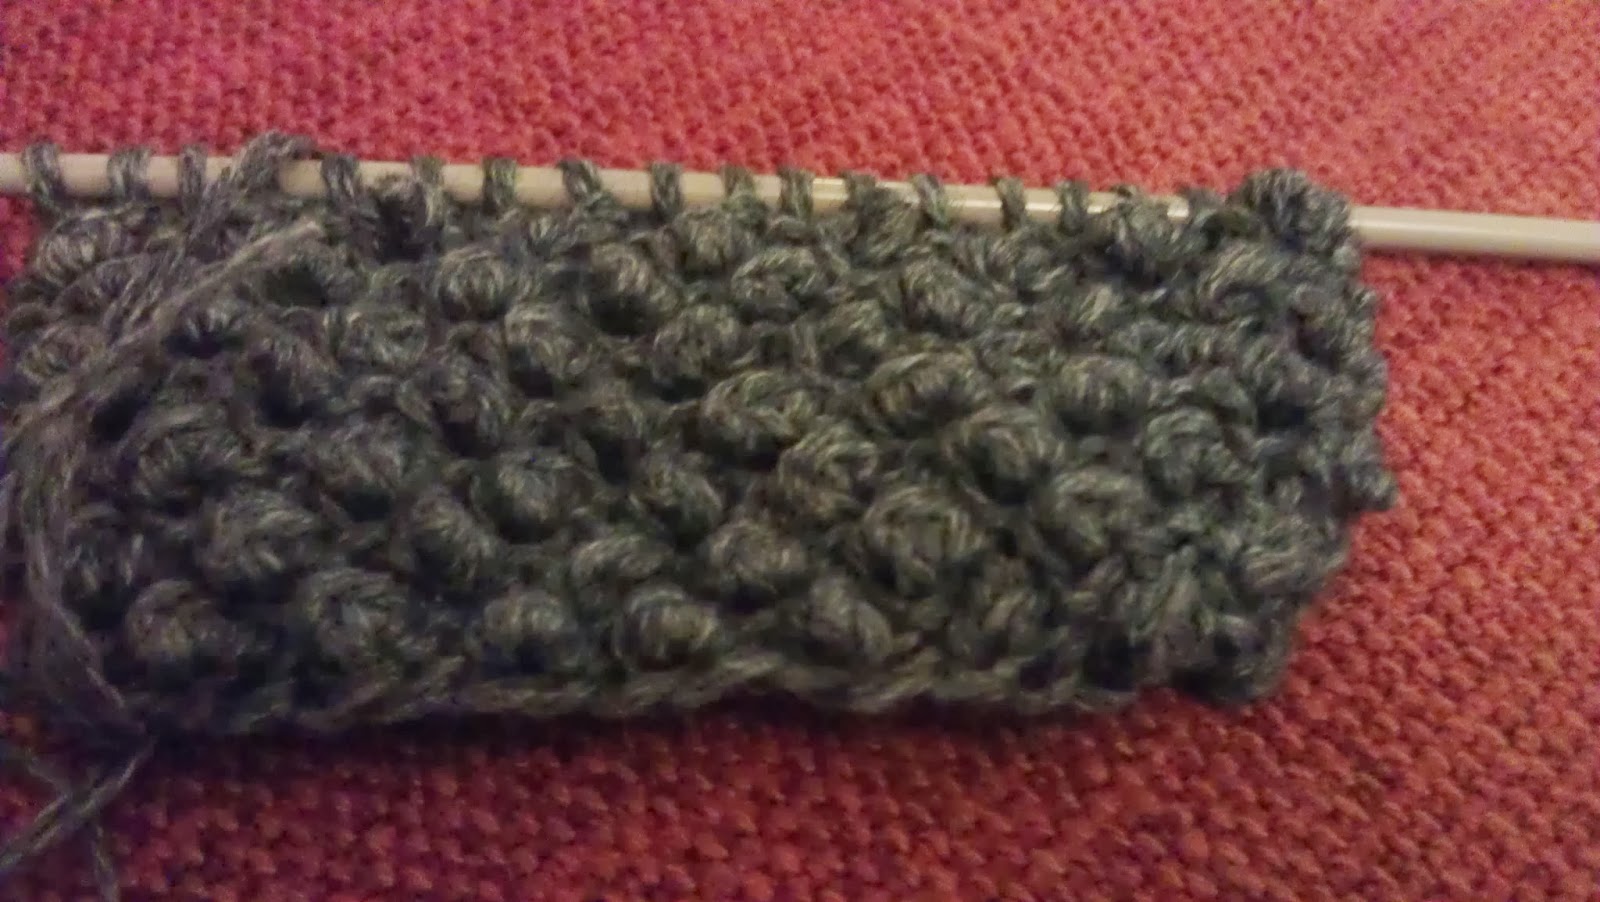 Knitting Mandag december - Mini Bobble Stitch